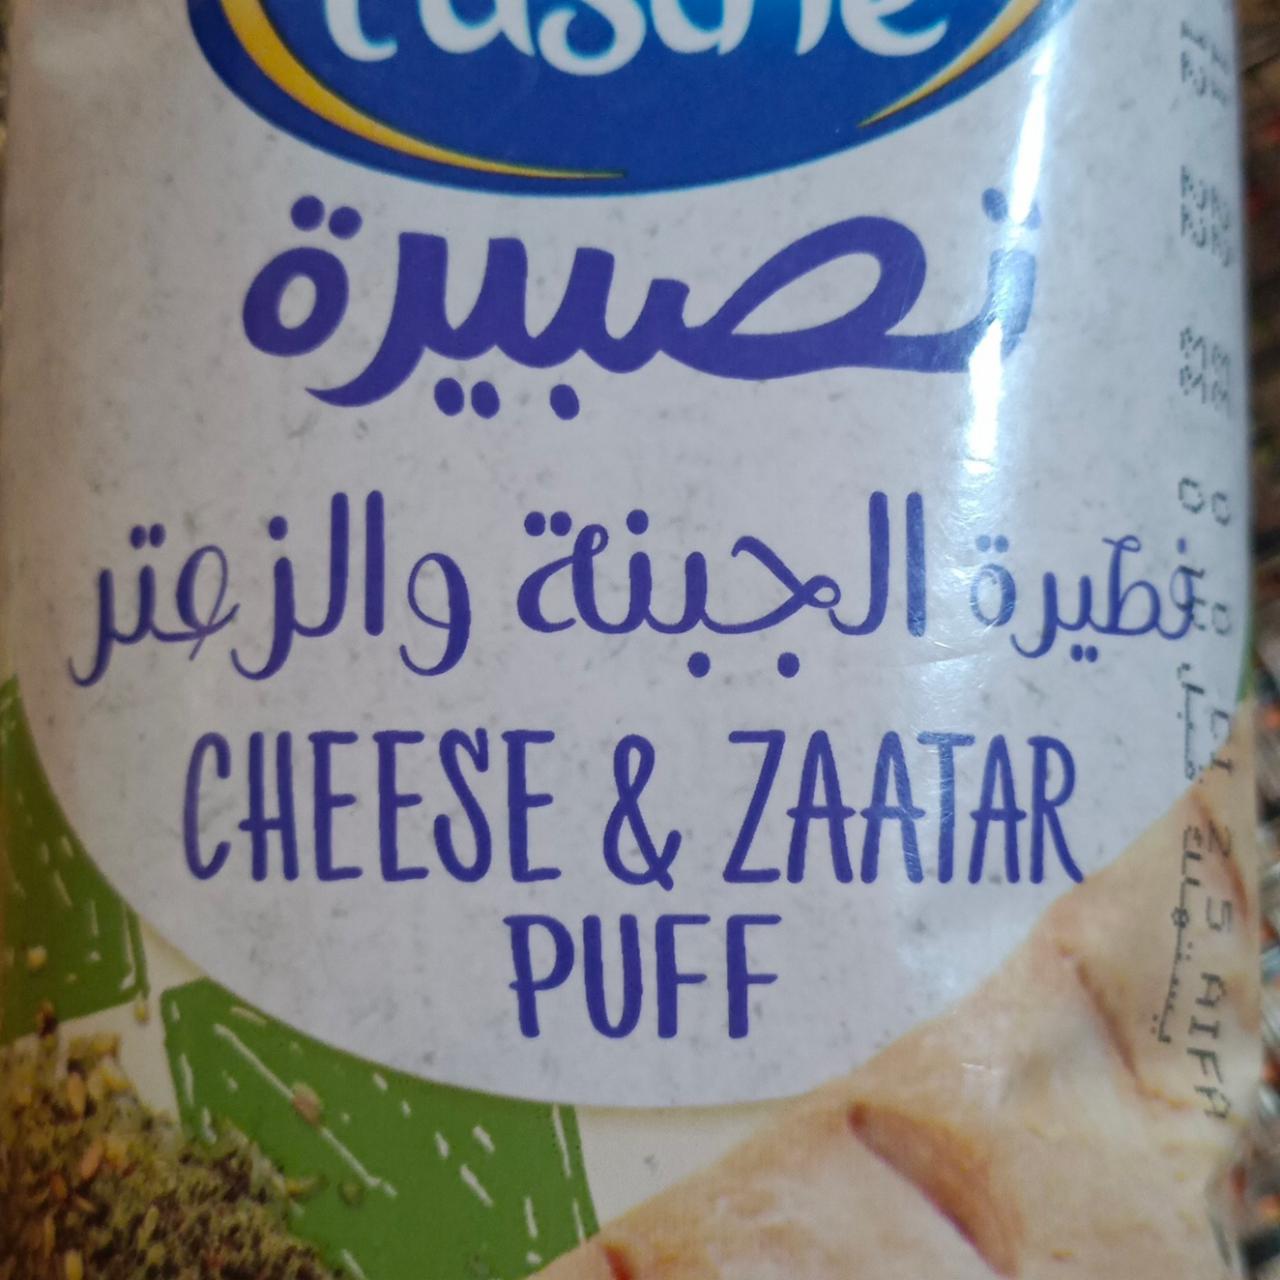 Fotografie - Cheese & zaatar puff L'usine